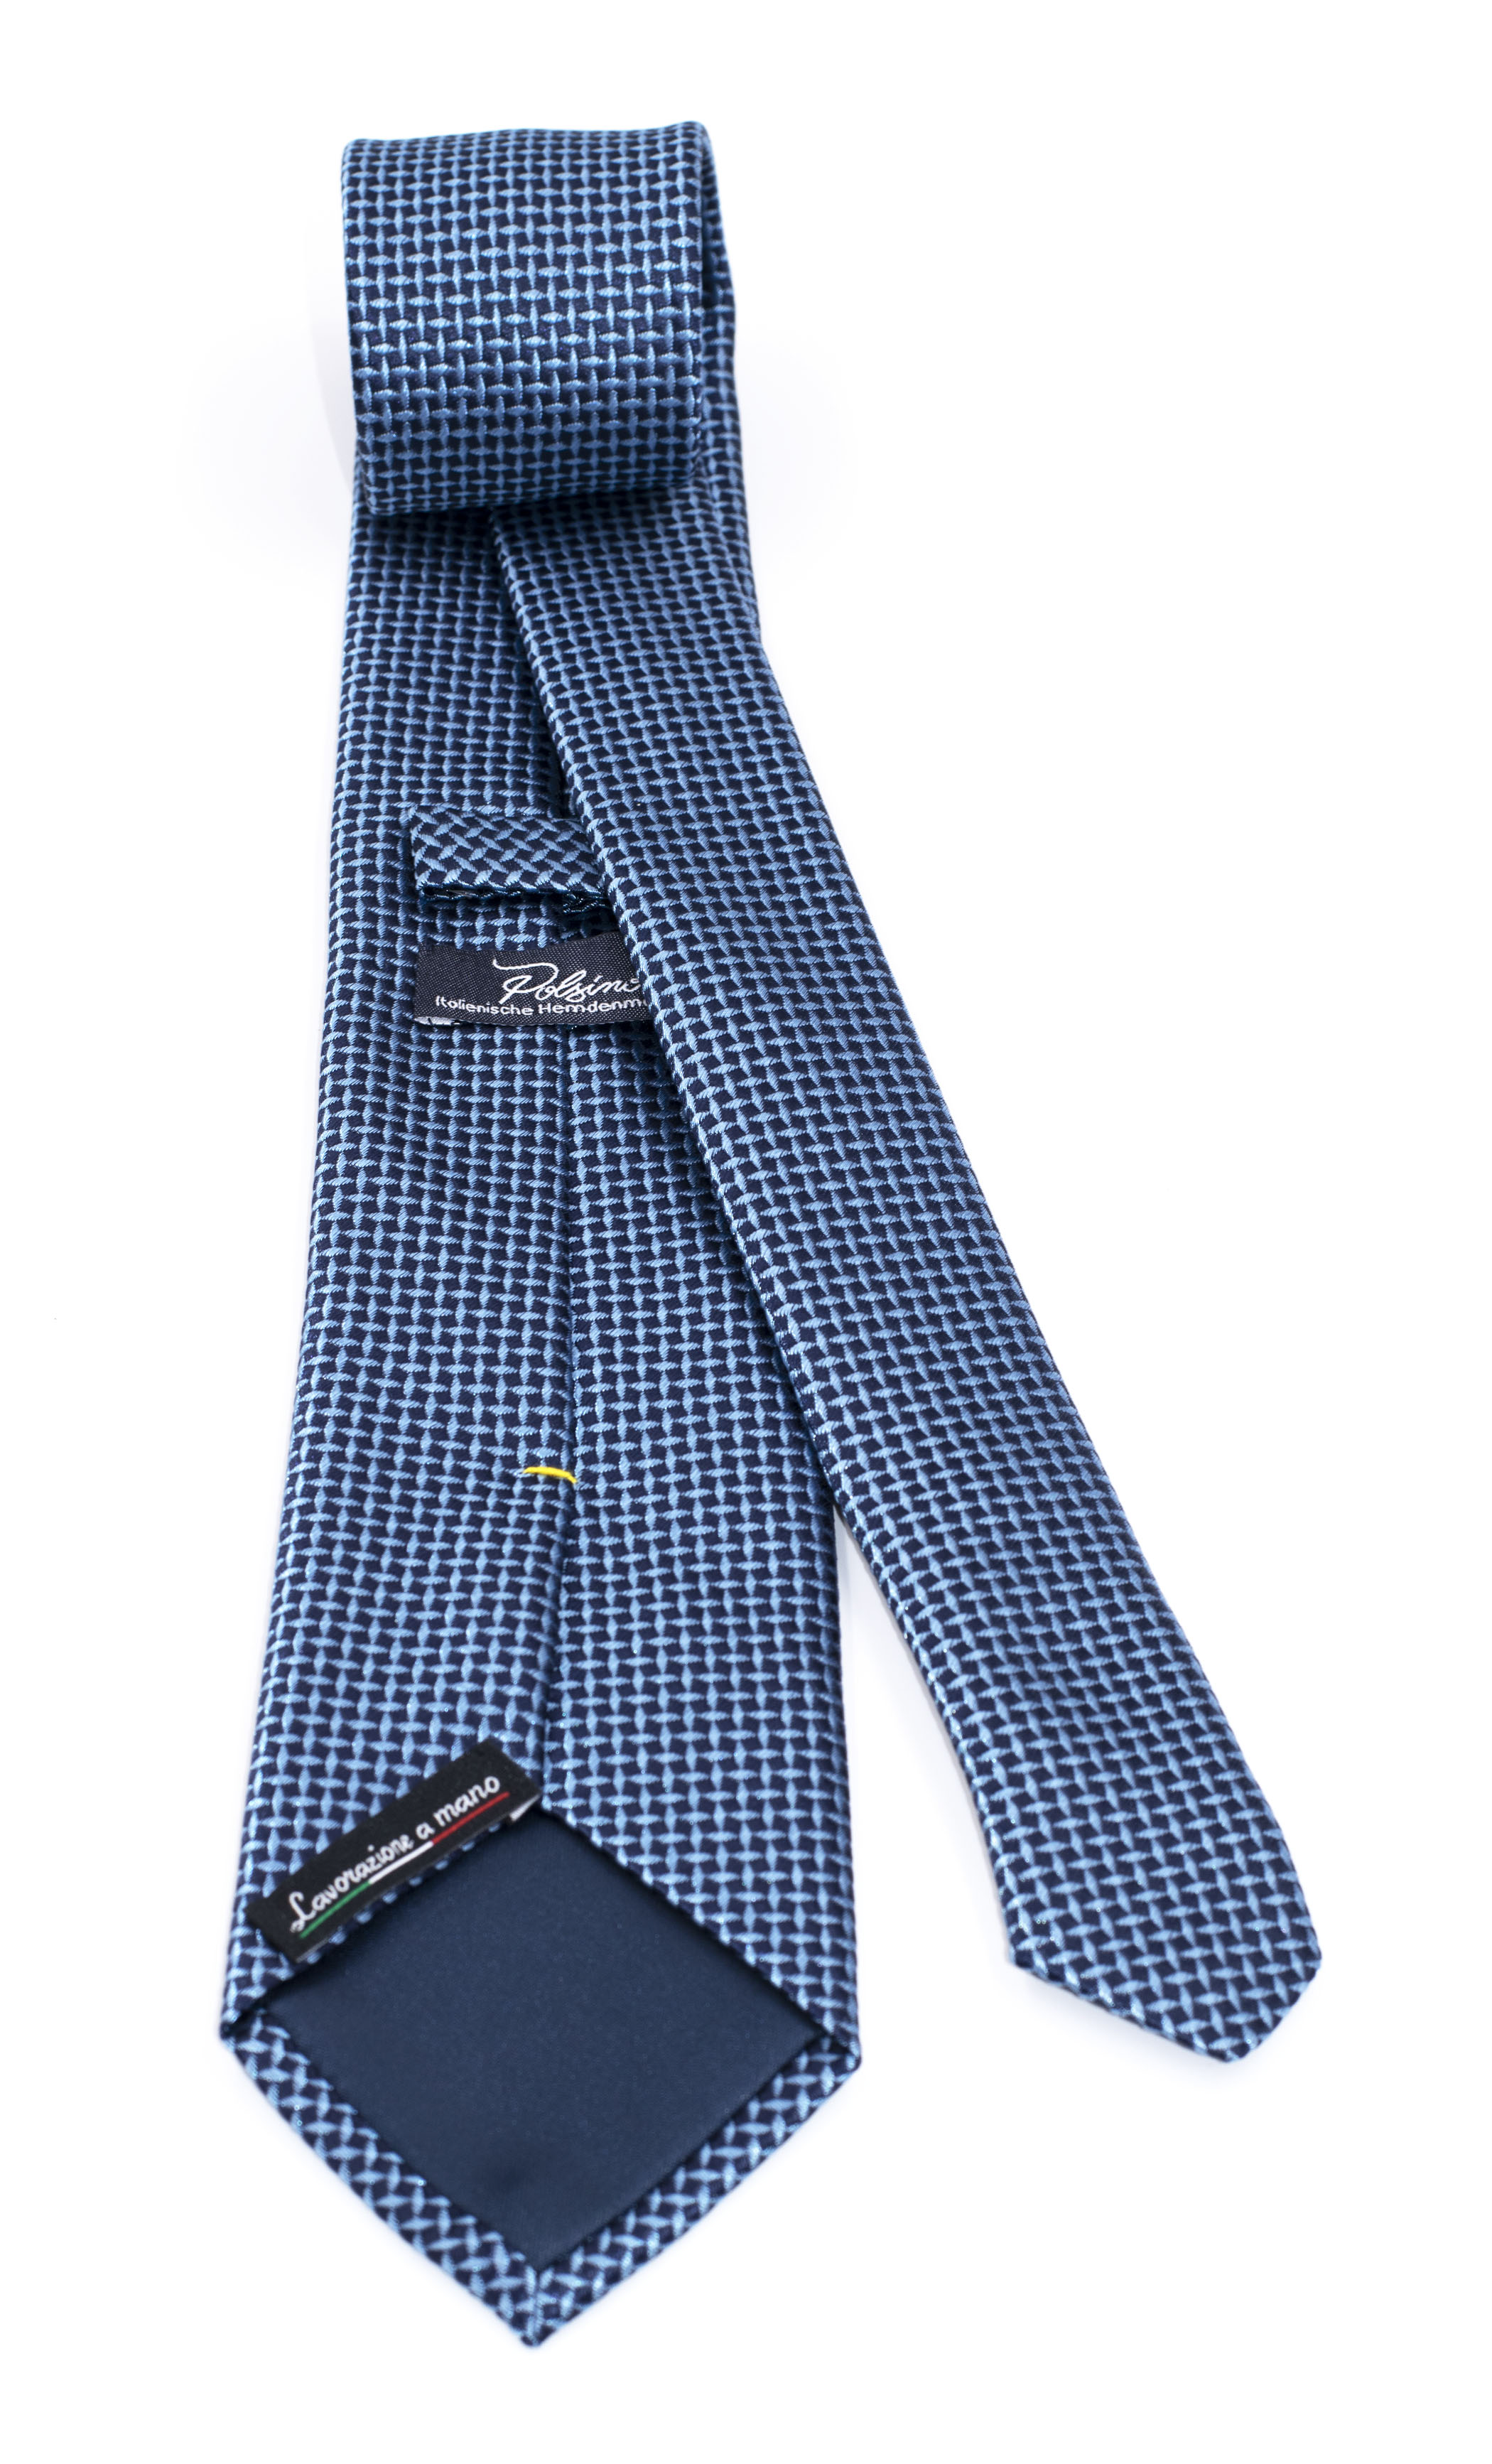 Hellblaue Krawatte dunkelblauem – Polsino Muster mit